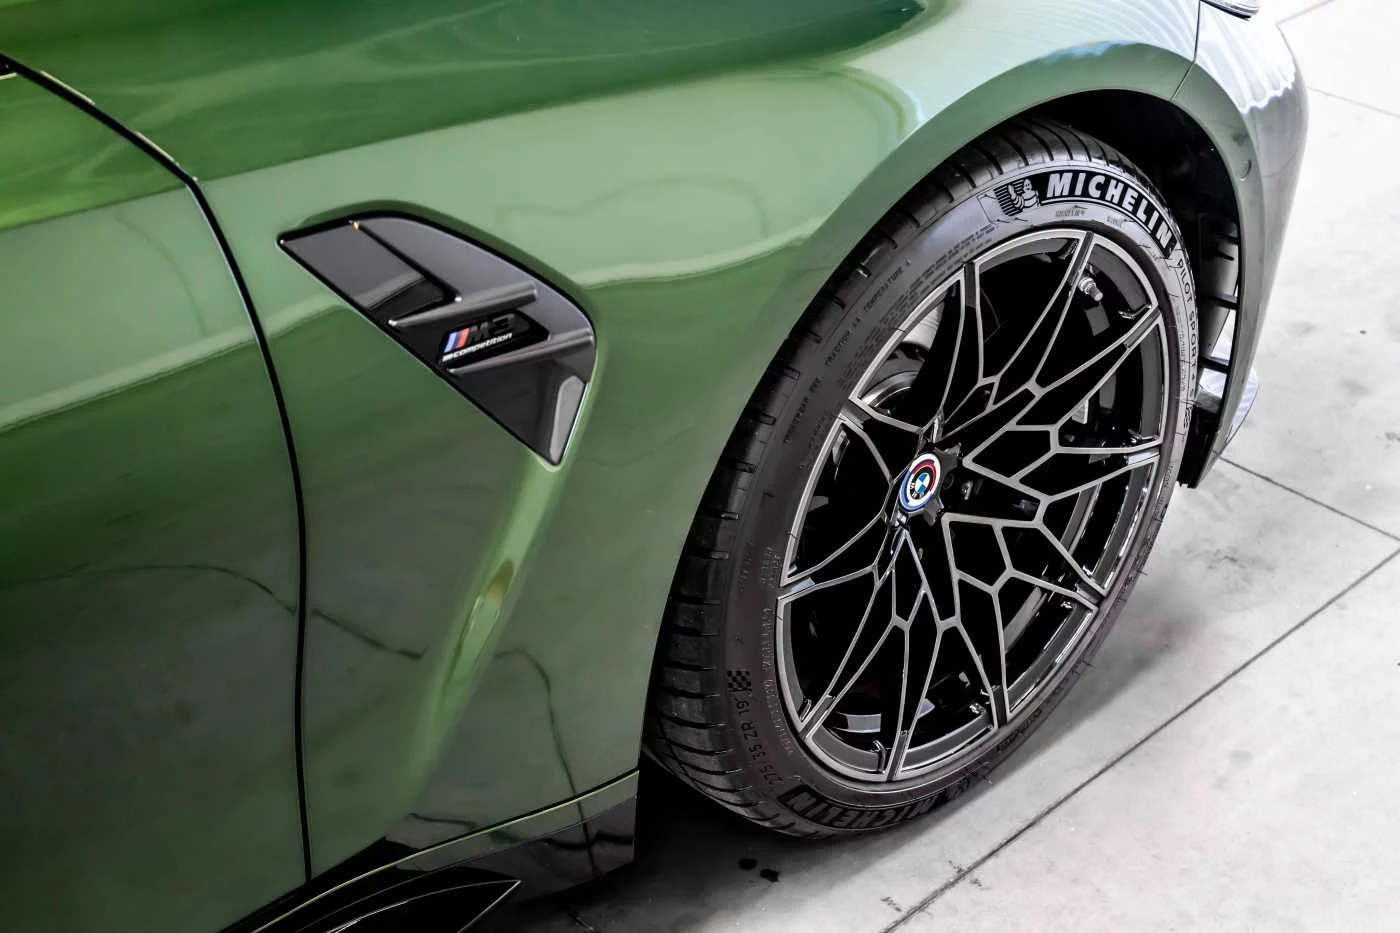 Verde Ermes BMW M3